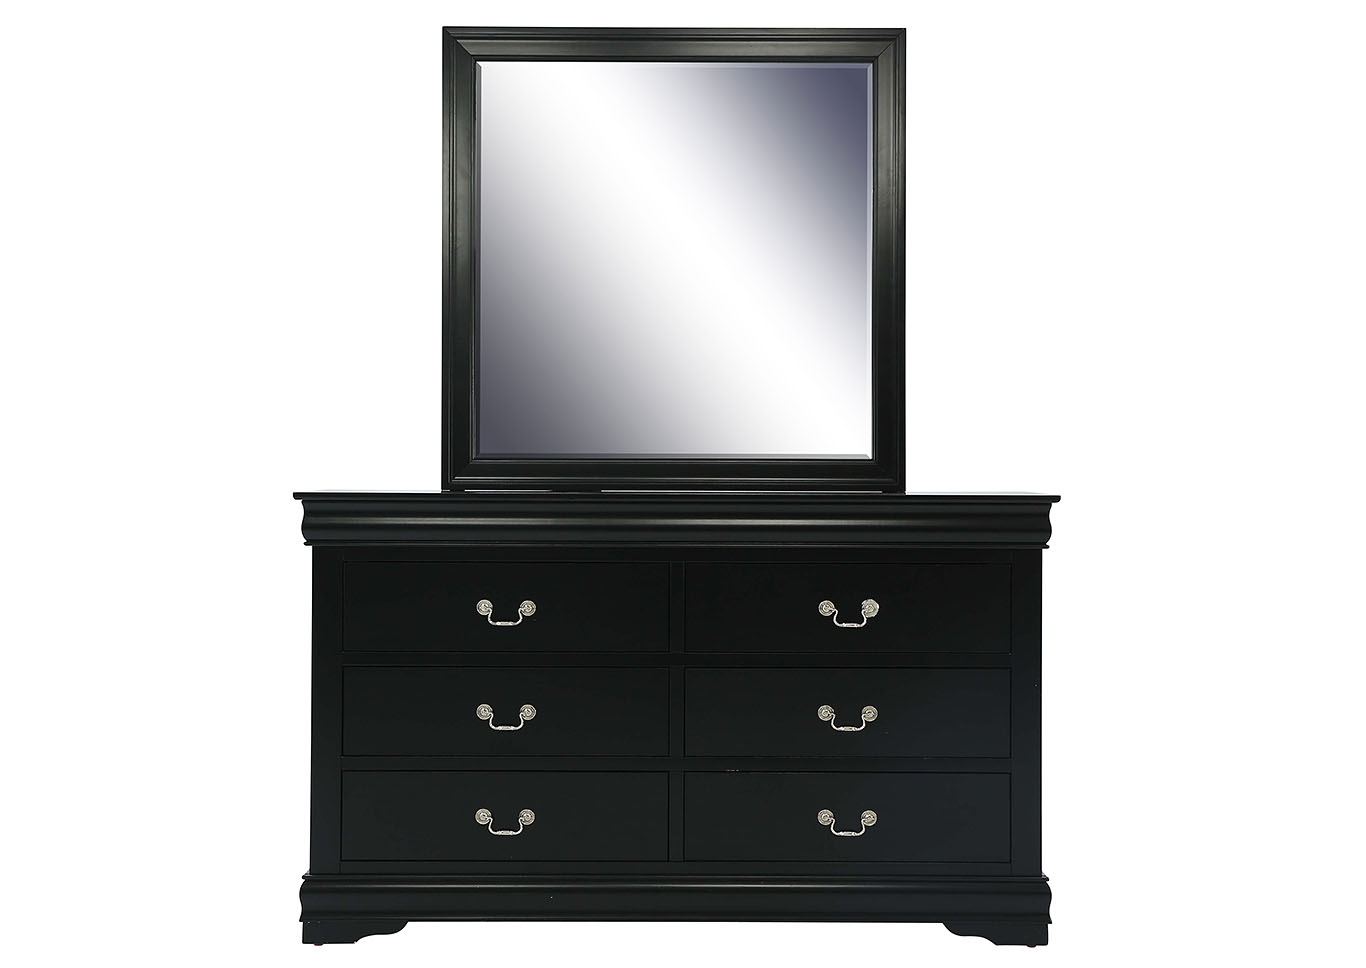 Louis Philippe Dresser with Mirror - White